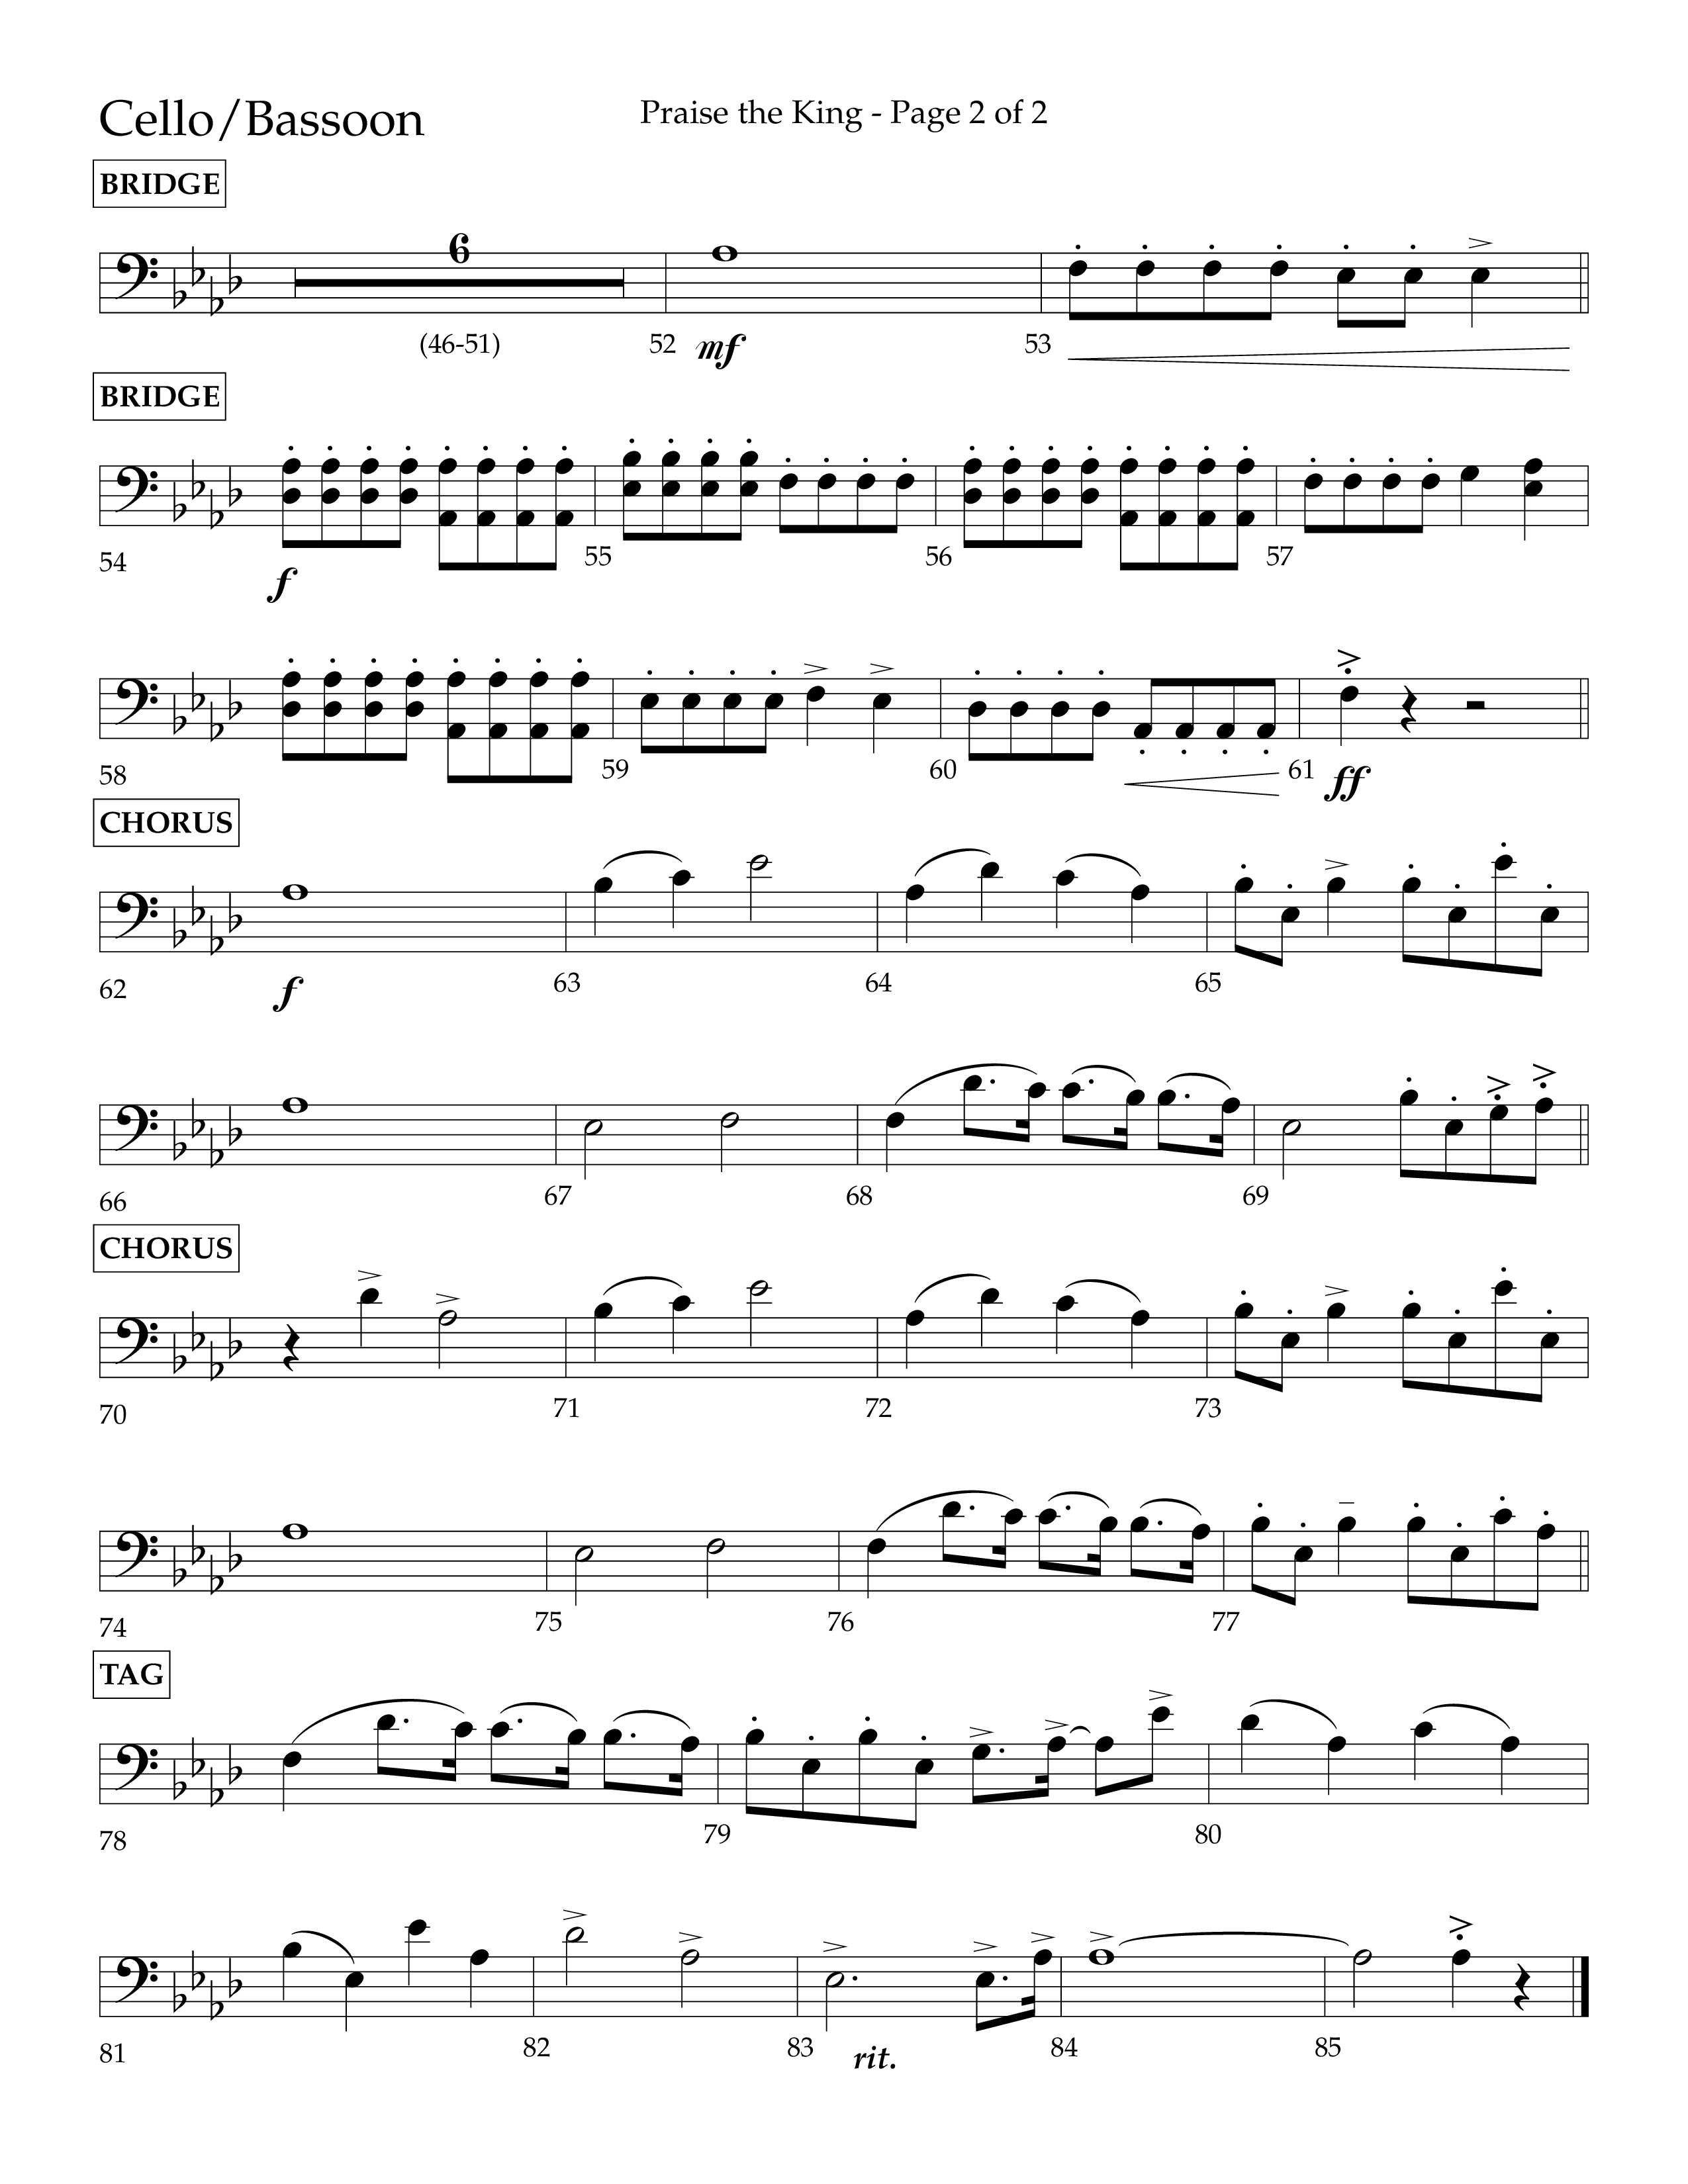 Praise The King (Choral Anthem SATB) Cello (Lifeway Choral / Arr. Phil Nitz)